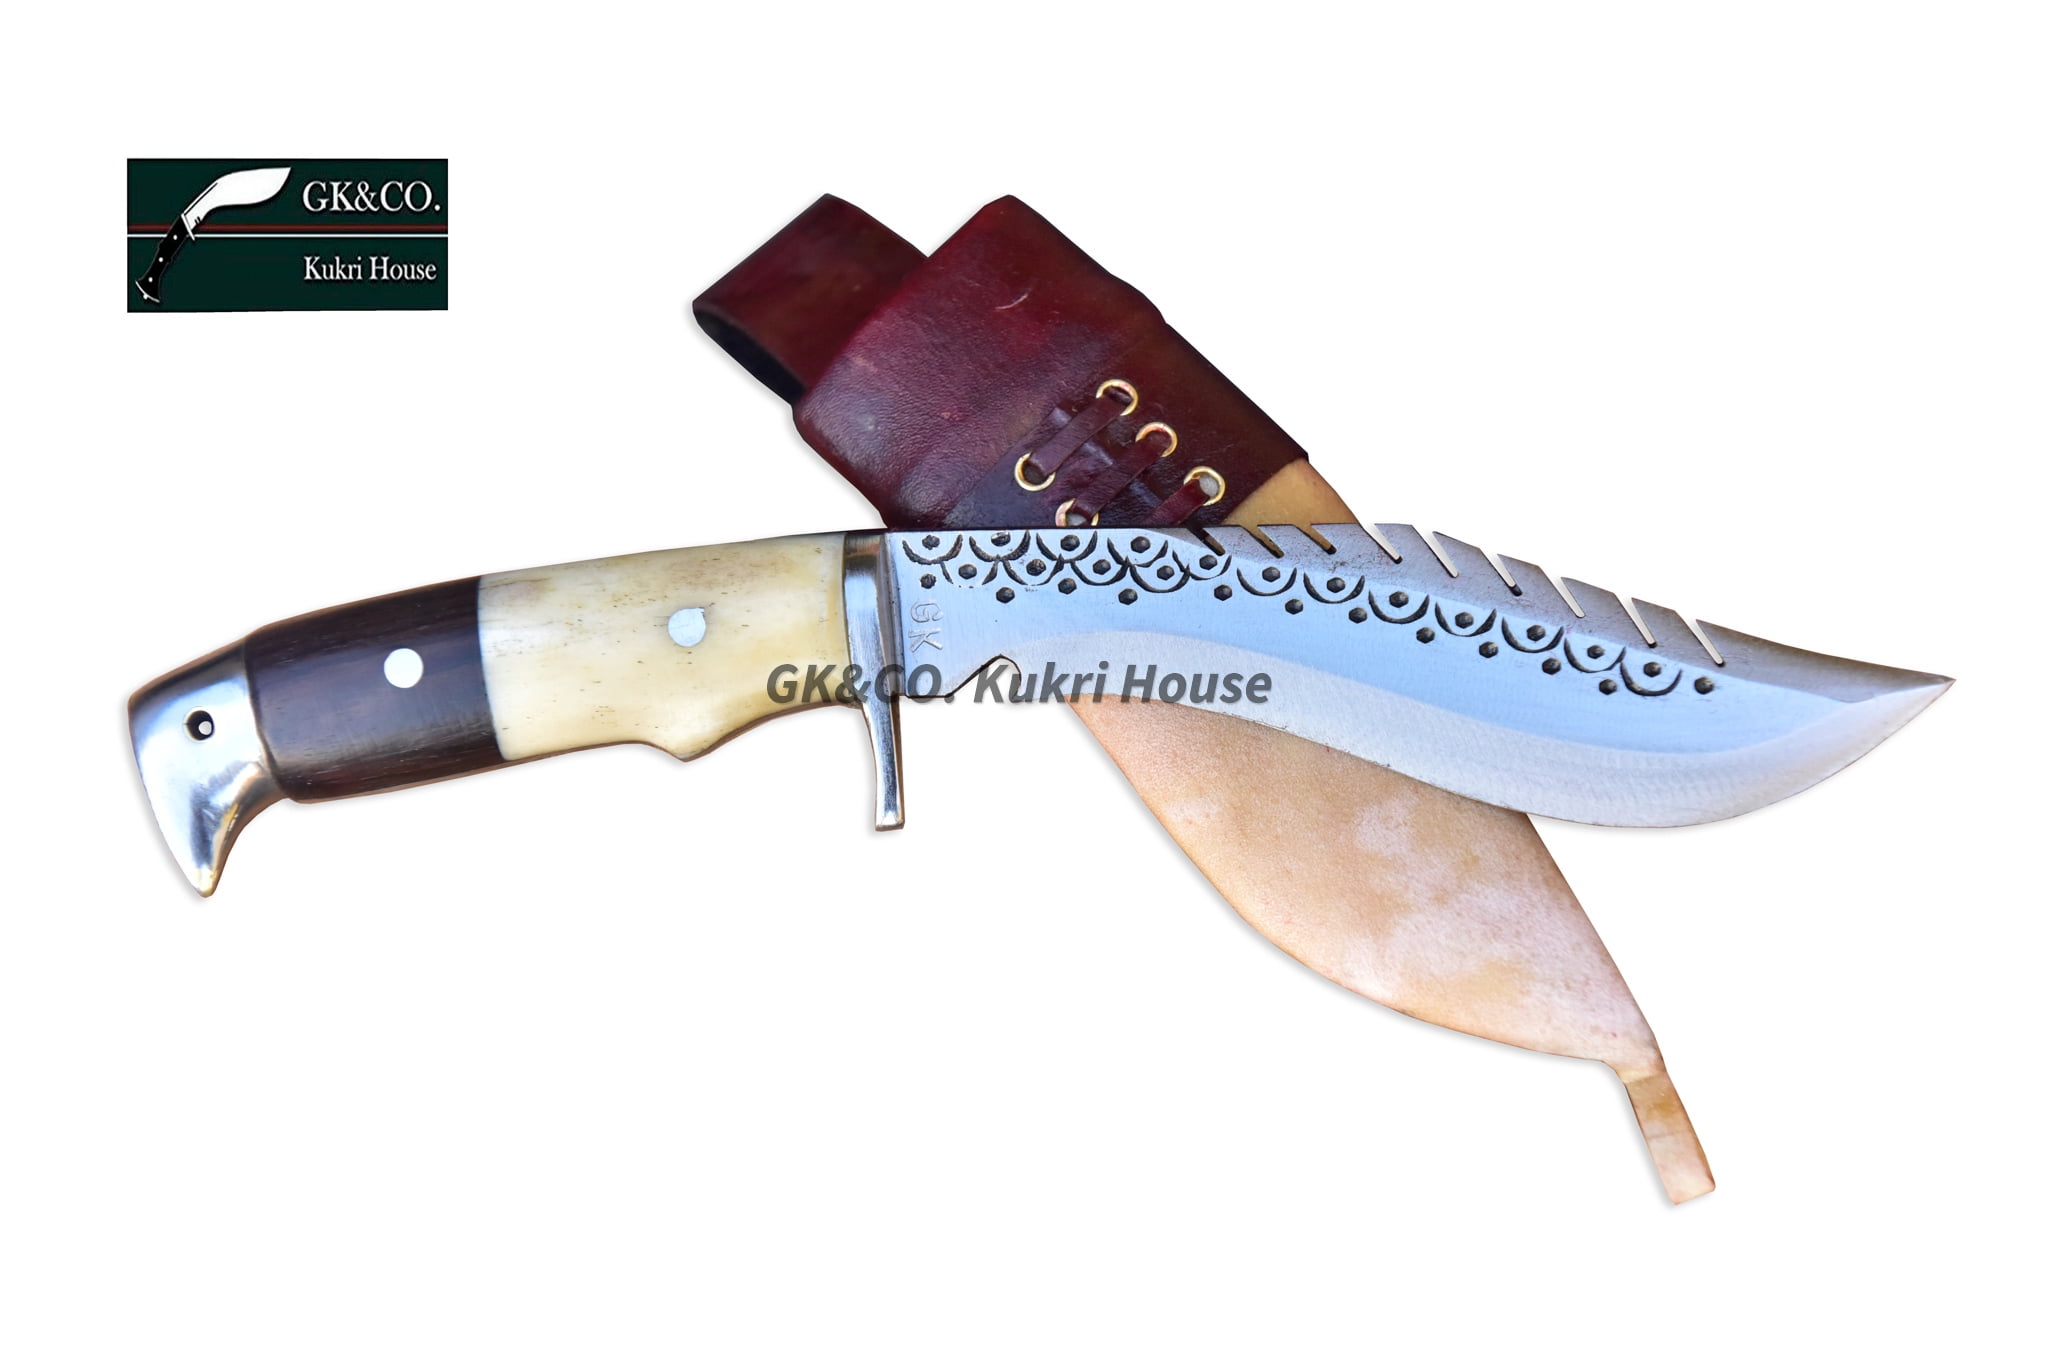 Mindre Omkreds Rund Gurkhas Kukri- 5 Inch Blade American Eagle Dragon Bone+ Wooden Handle Kukri  ( Kitchen knife) Handmade by GK&CO. Kukri House in Nepal. - Walmart.com